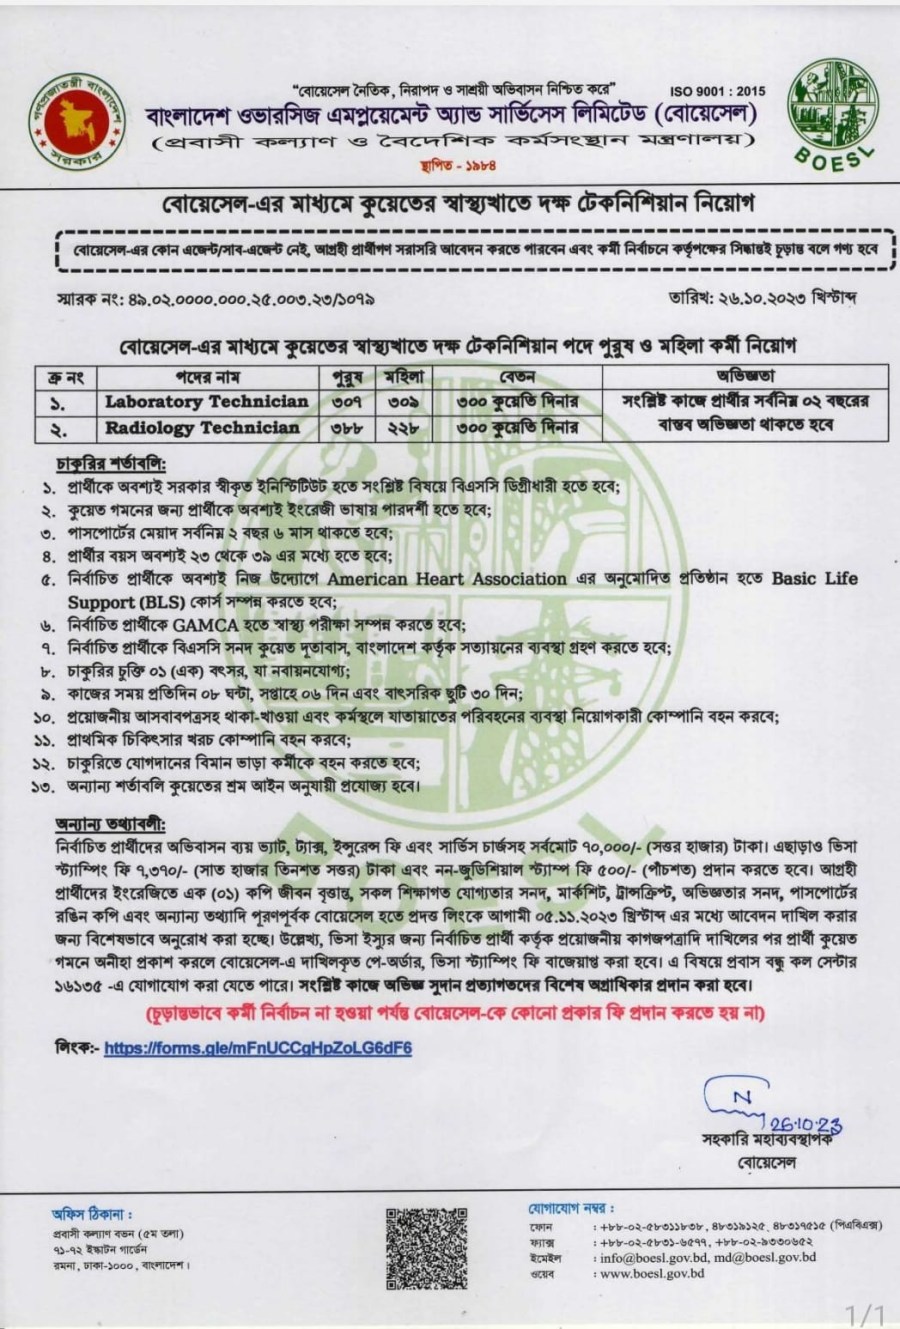 BOESL Kuwait Job Circular 2023 boesl.gov.bd - Kuwait Work Permit Visa for Bangladesh